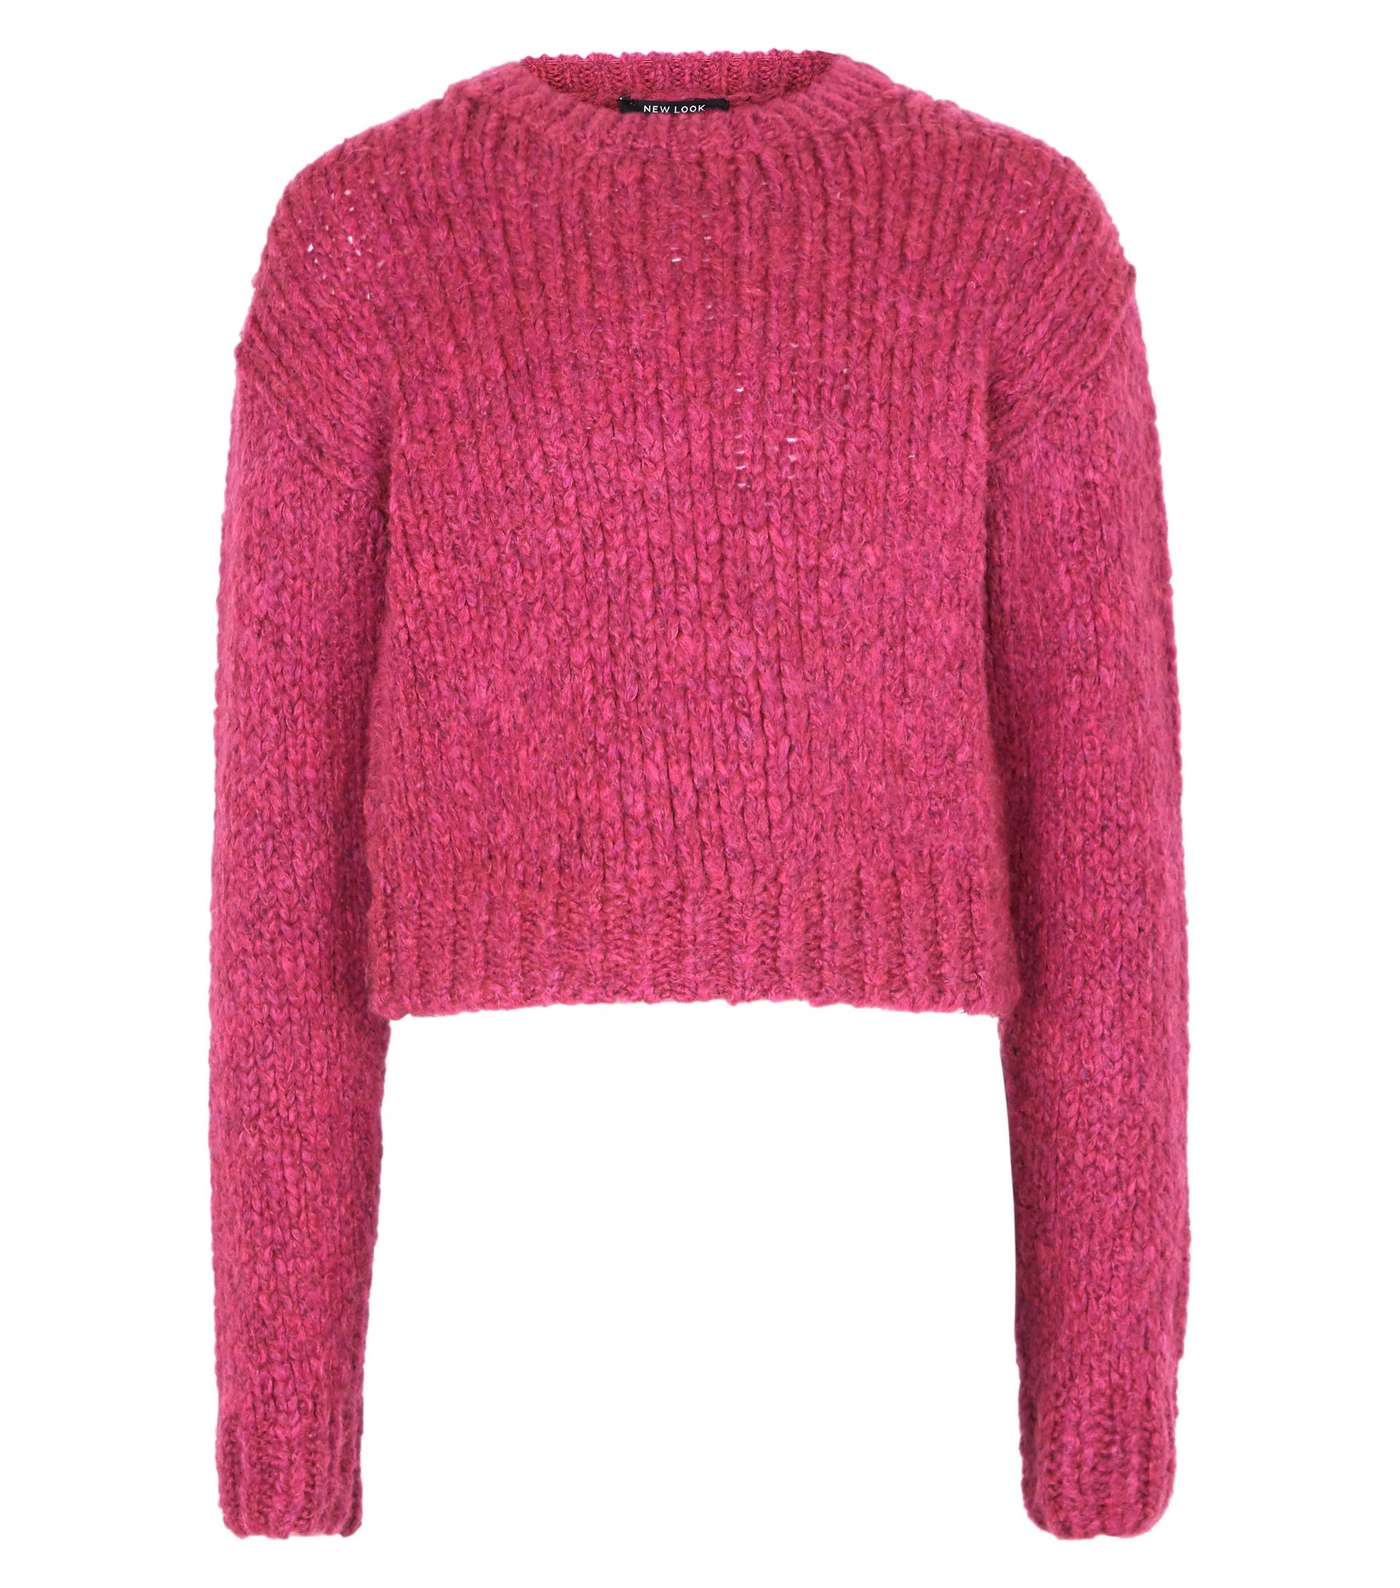 Girls Bright Pink Fluffy Knit Jumper Image 4